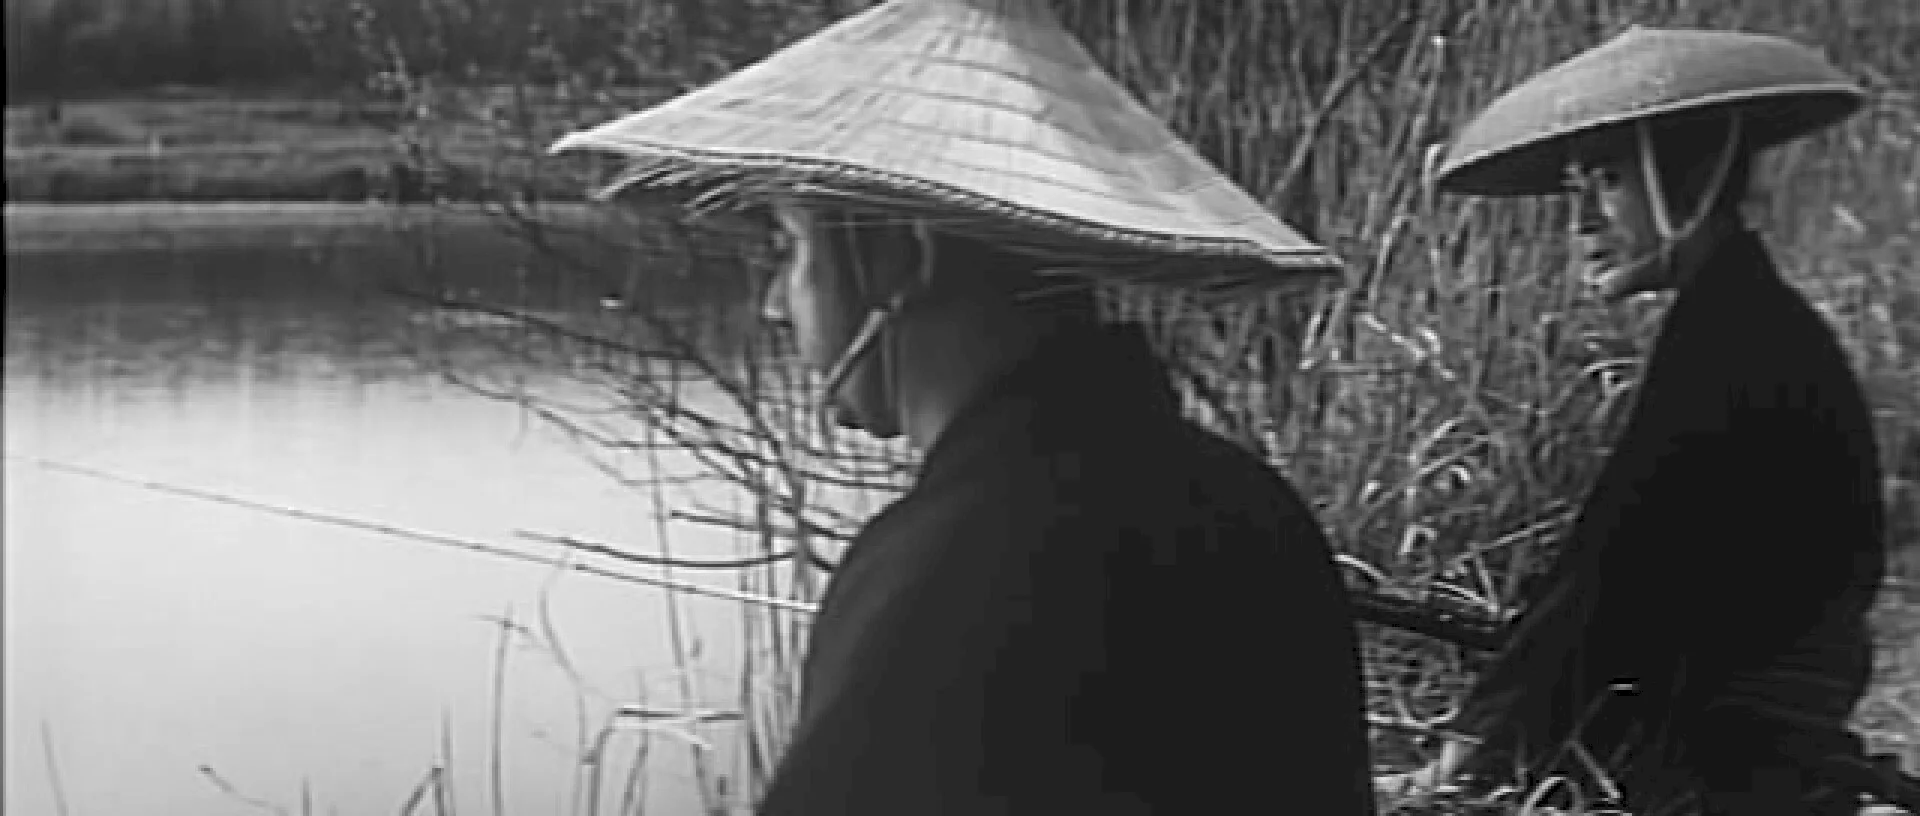 Photo du film : Zatoichi, le masseur aveugle